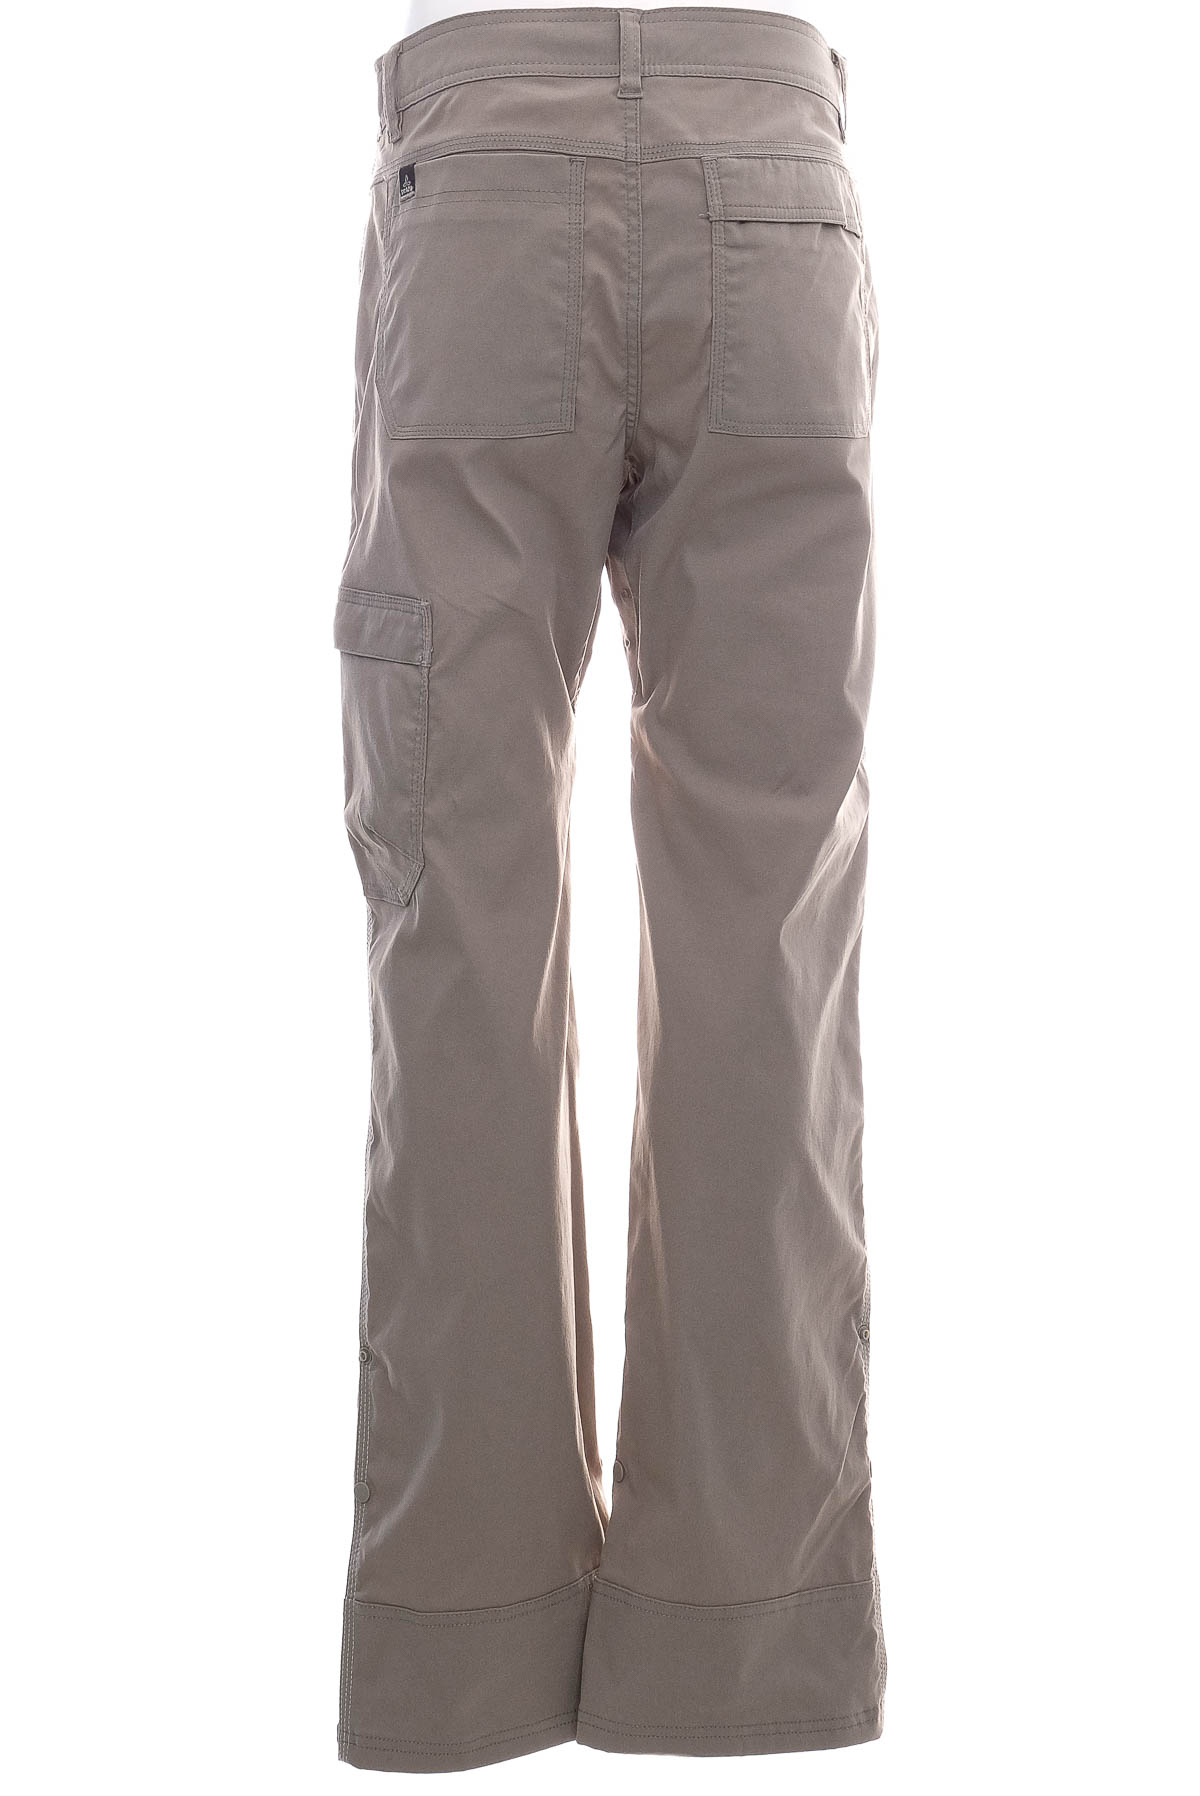 Pantalon pentru bărbați - Prana - 1